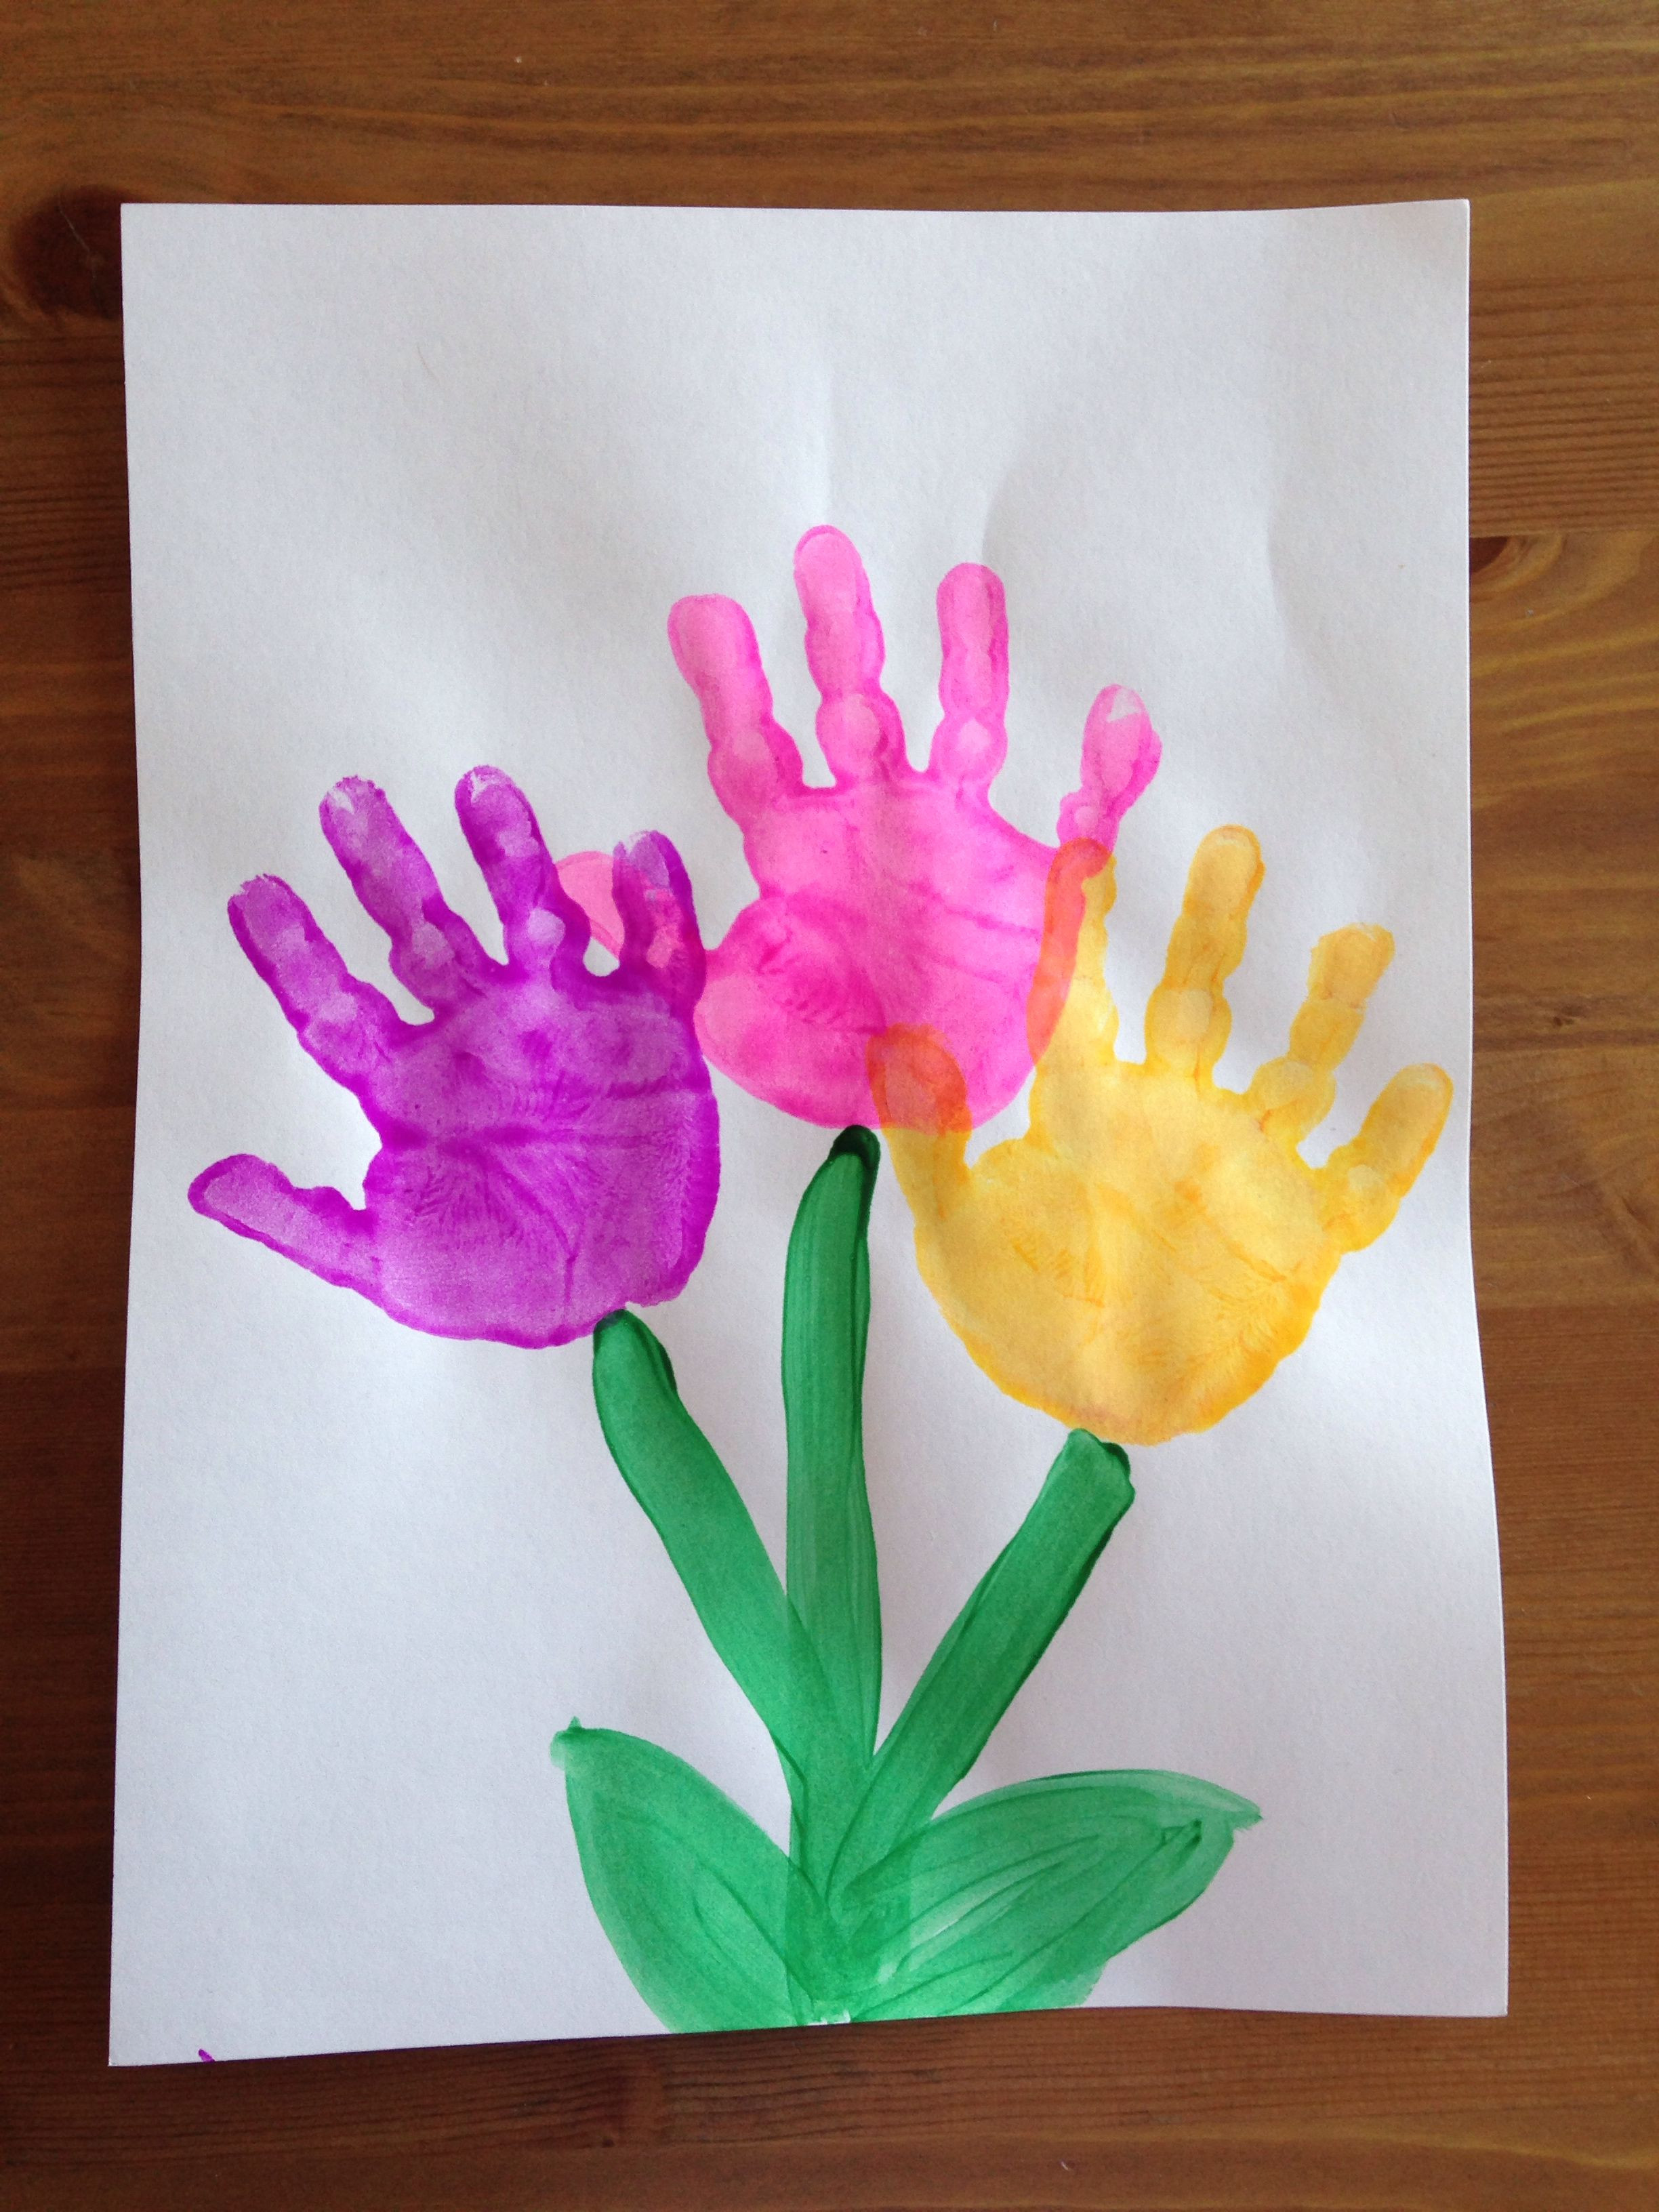 Best ideas about Spring Craft Ideas
. Save or Pin Handprint Flower Craft Spring Craft Preschool Craft Now.